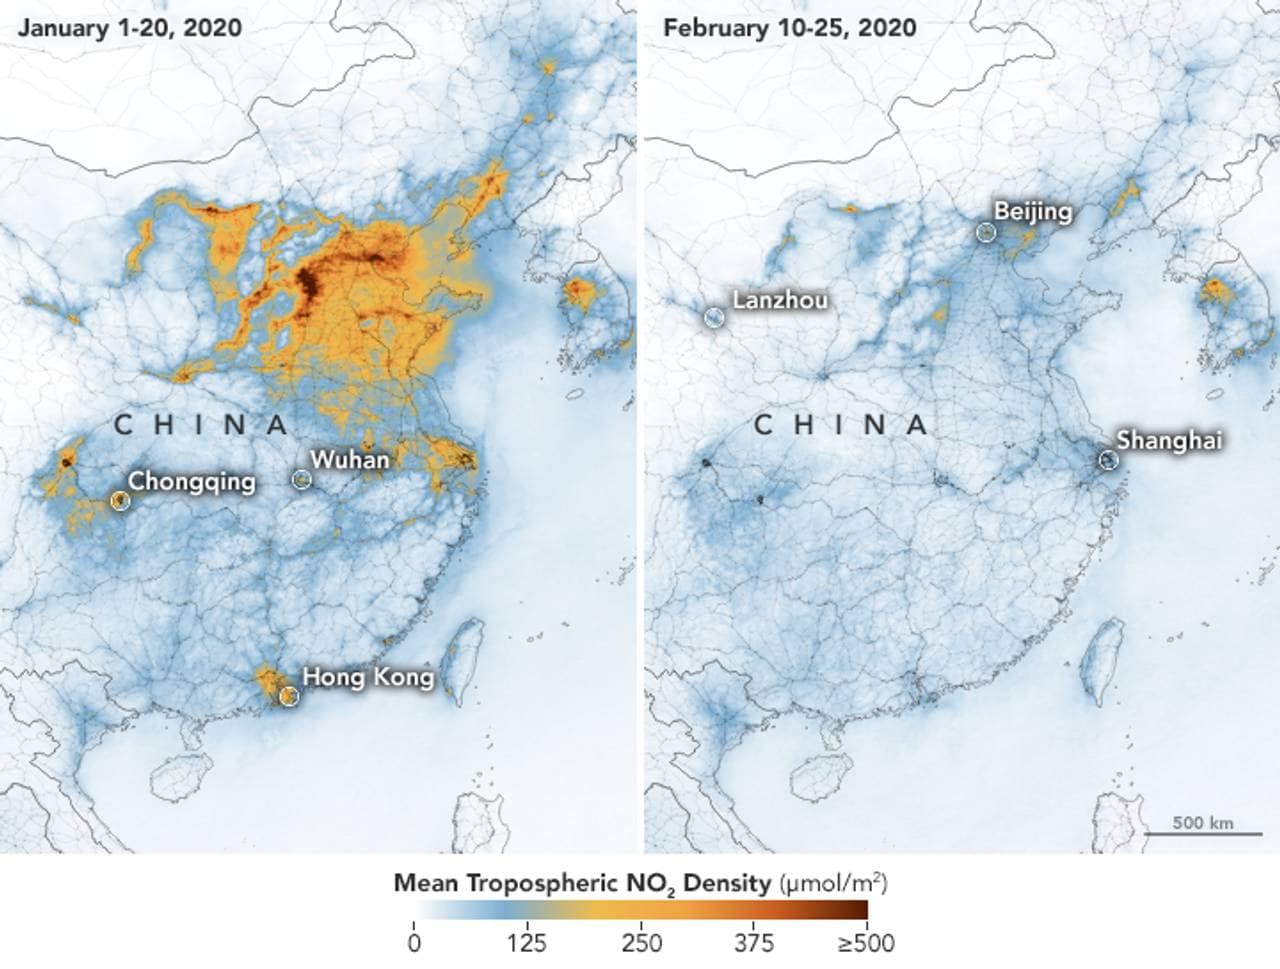 Luftkvaliteten over Kina